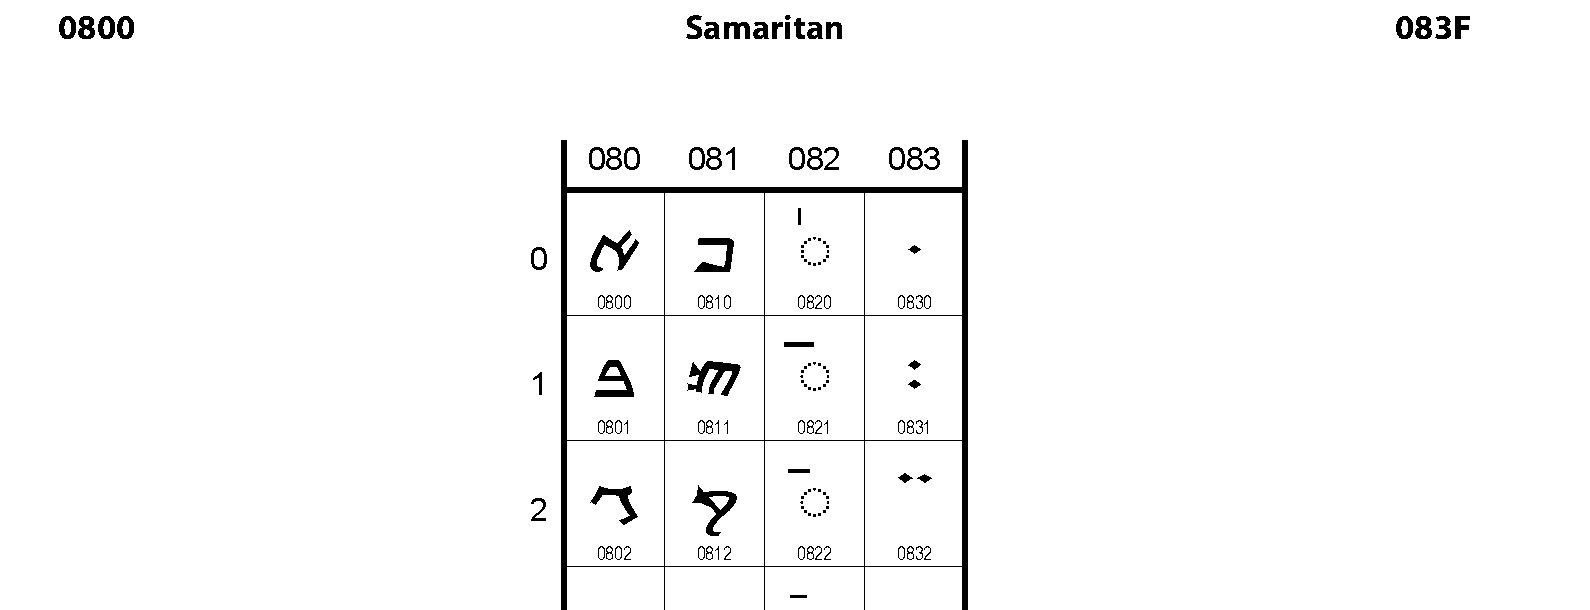 Unicode - Samaritan